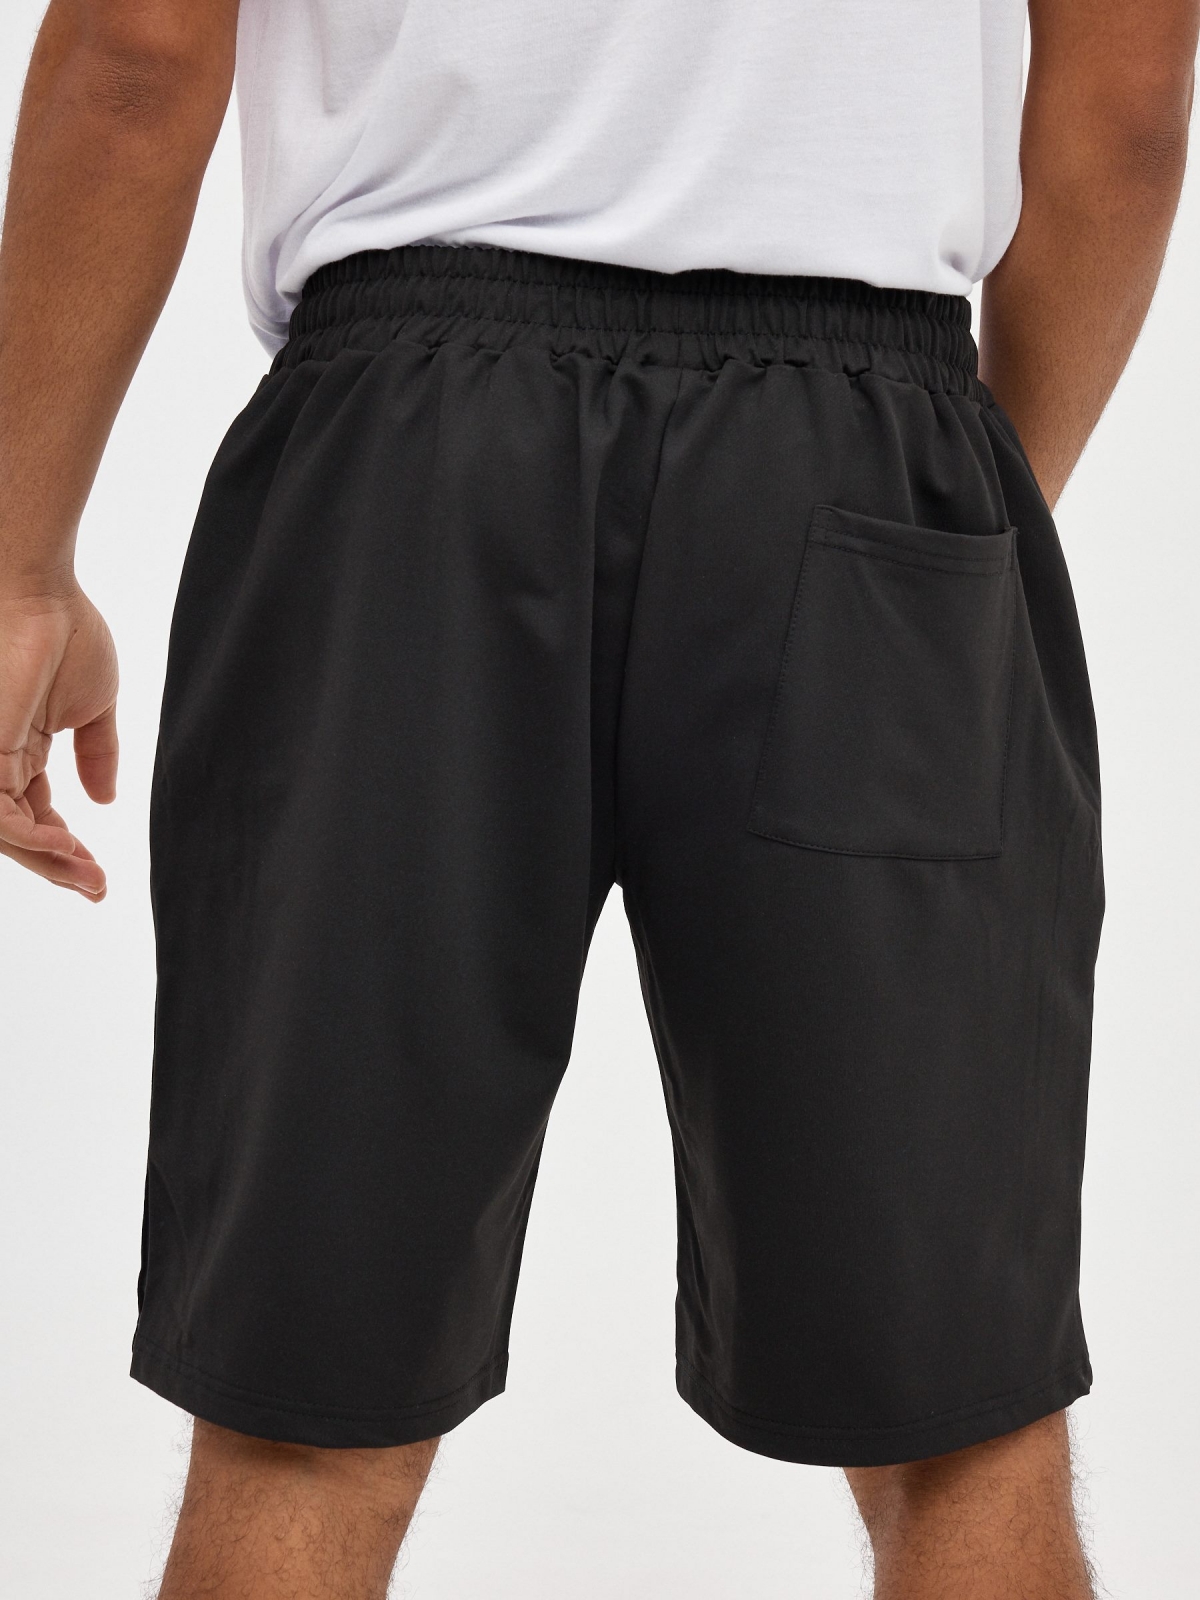 Black Bermuda jogger shorts black detail view